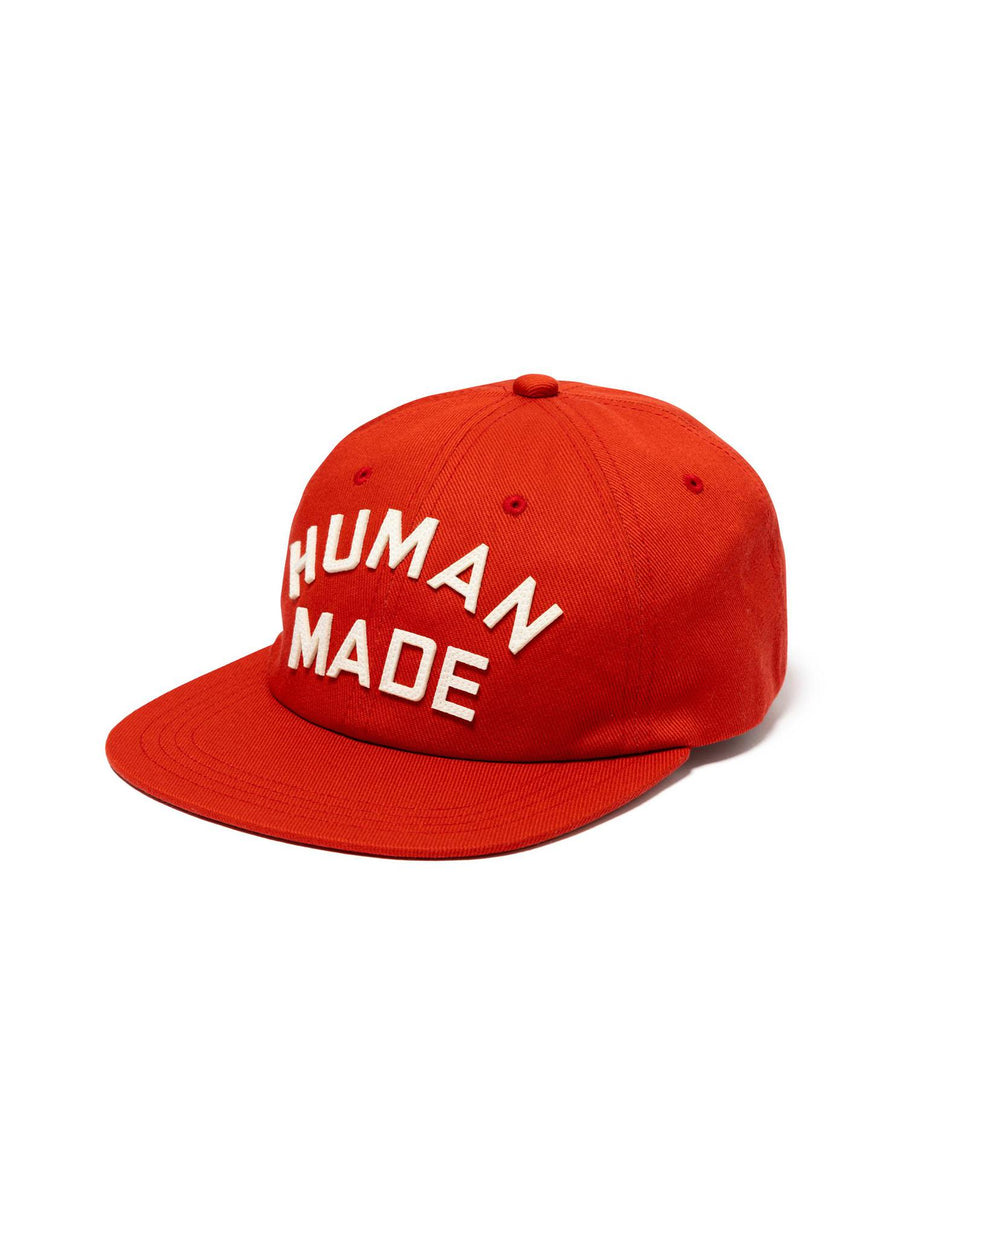 Human Made Baseball Cap | STASHED